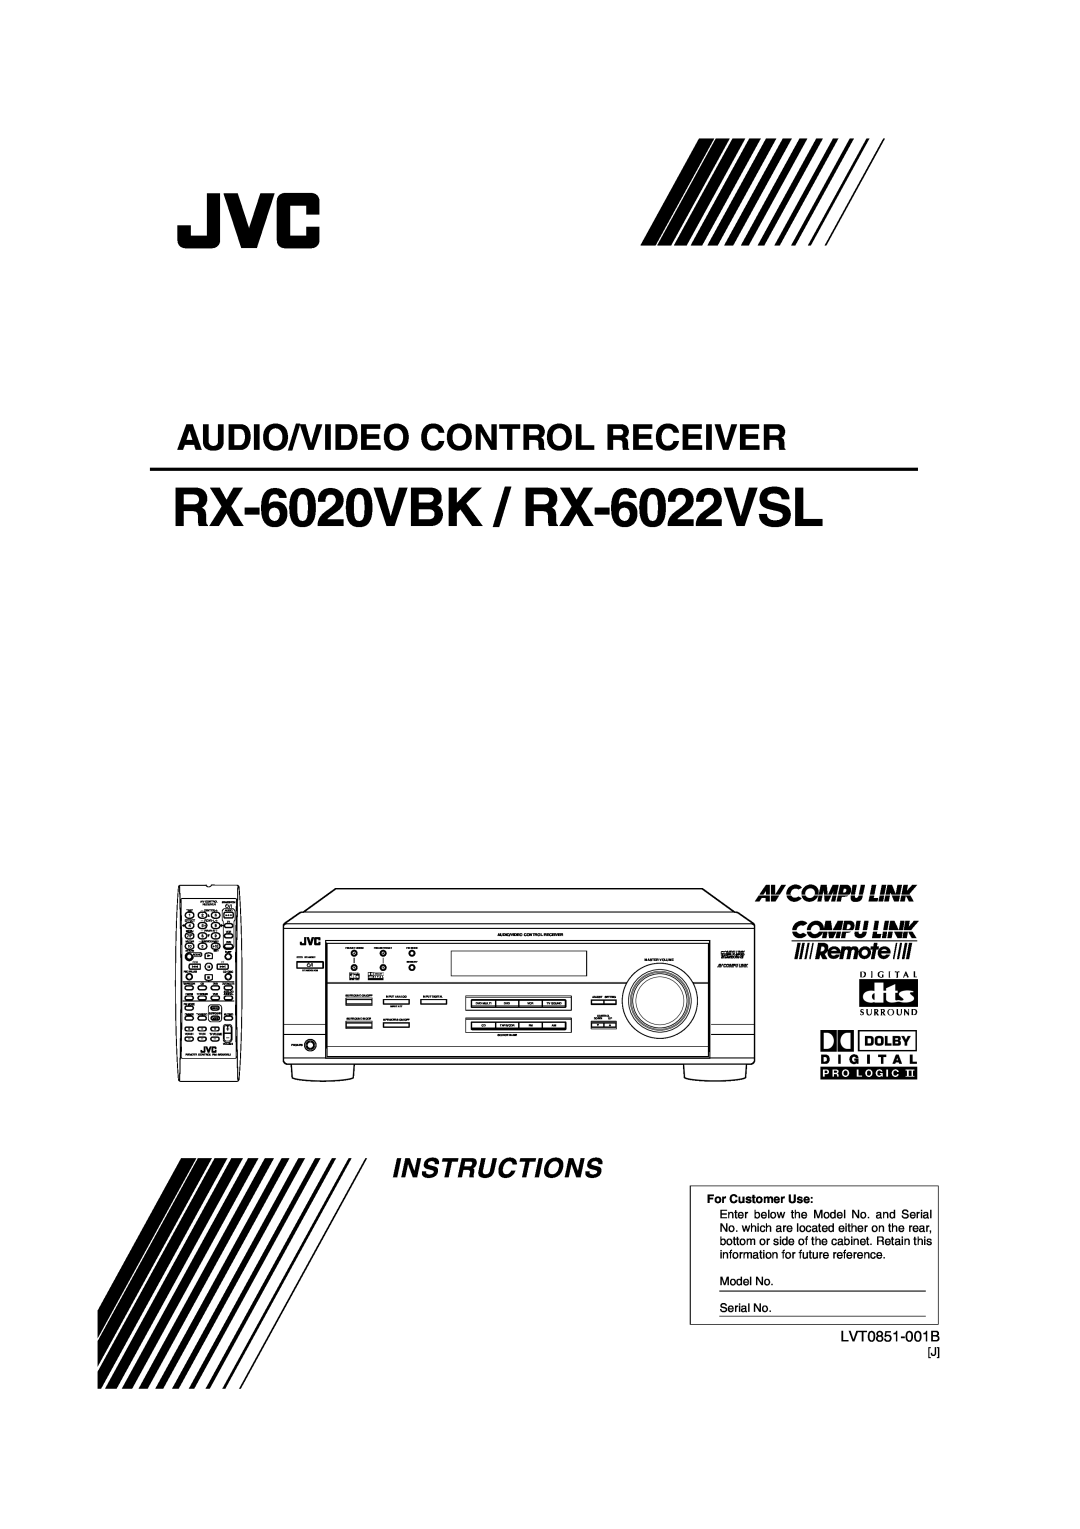 JVC manual RX-6020VBK / RX-6022VSL, Audio/Video Control Receiver, Instructions, LVT0851-001B 